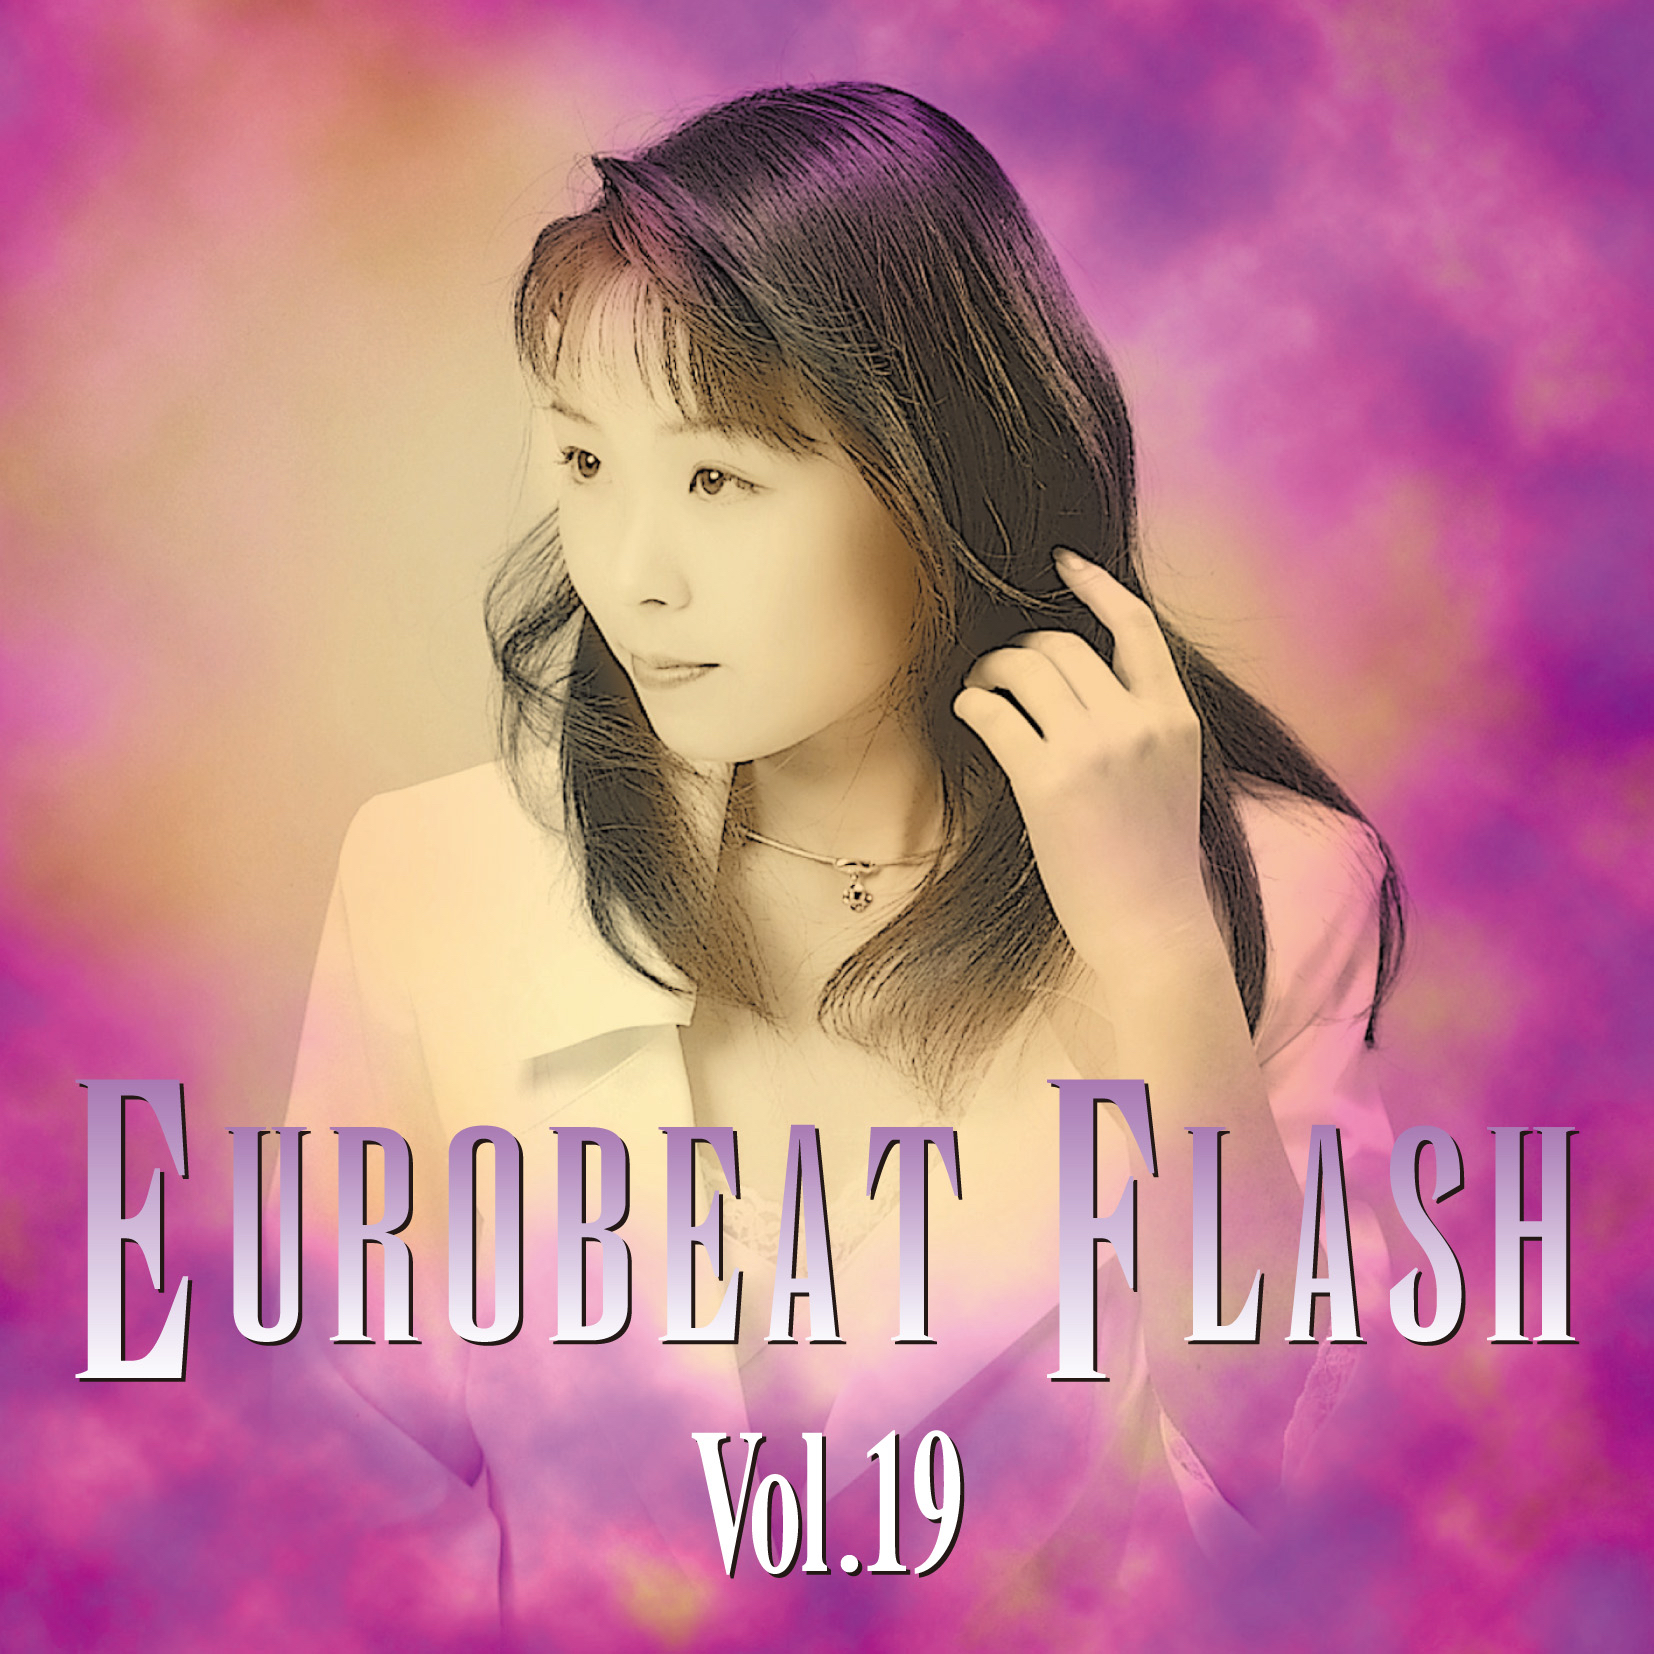 EUROBEAT FLASH Vol.19-